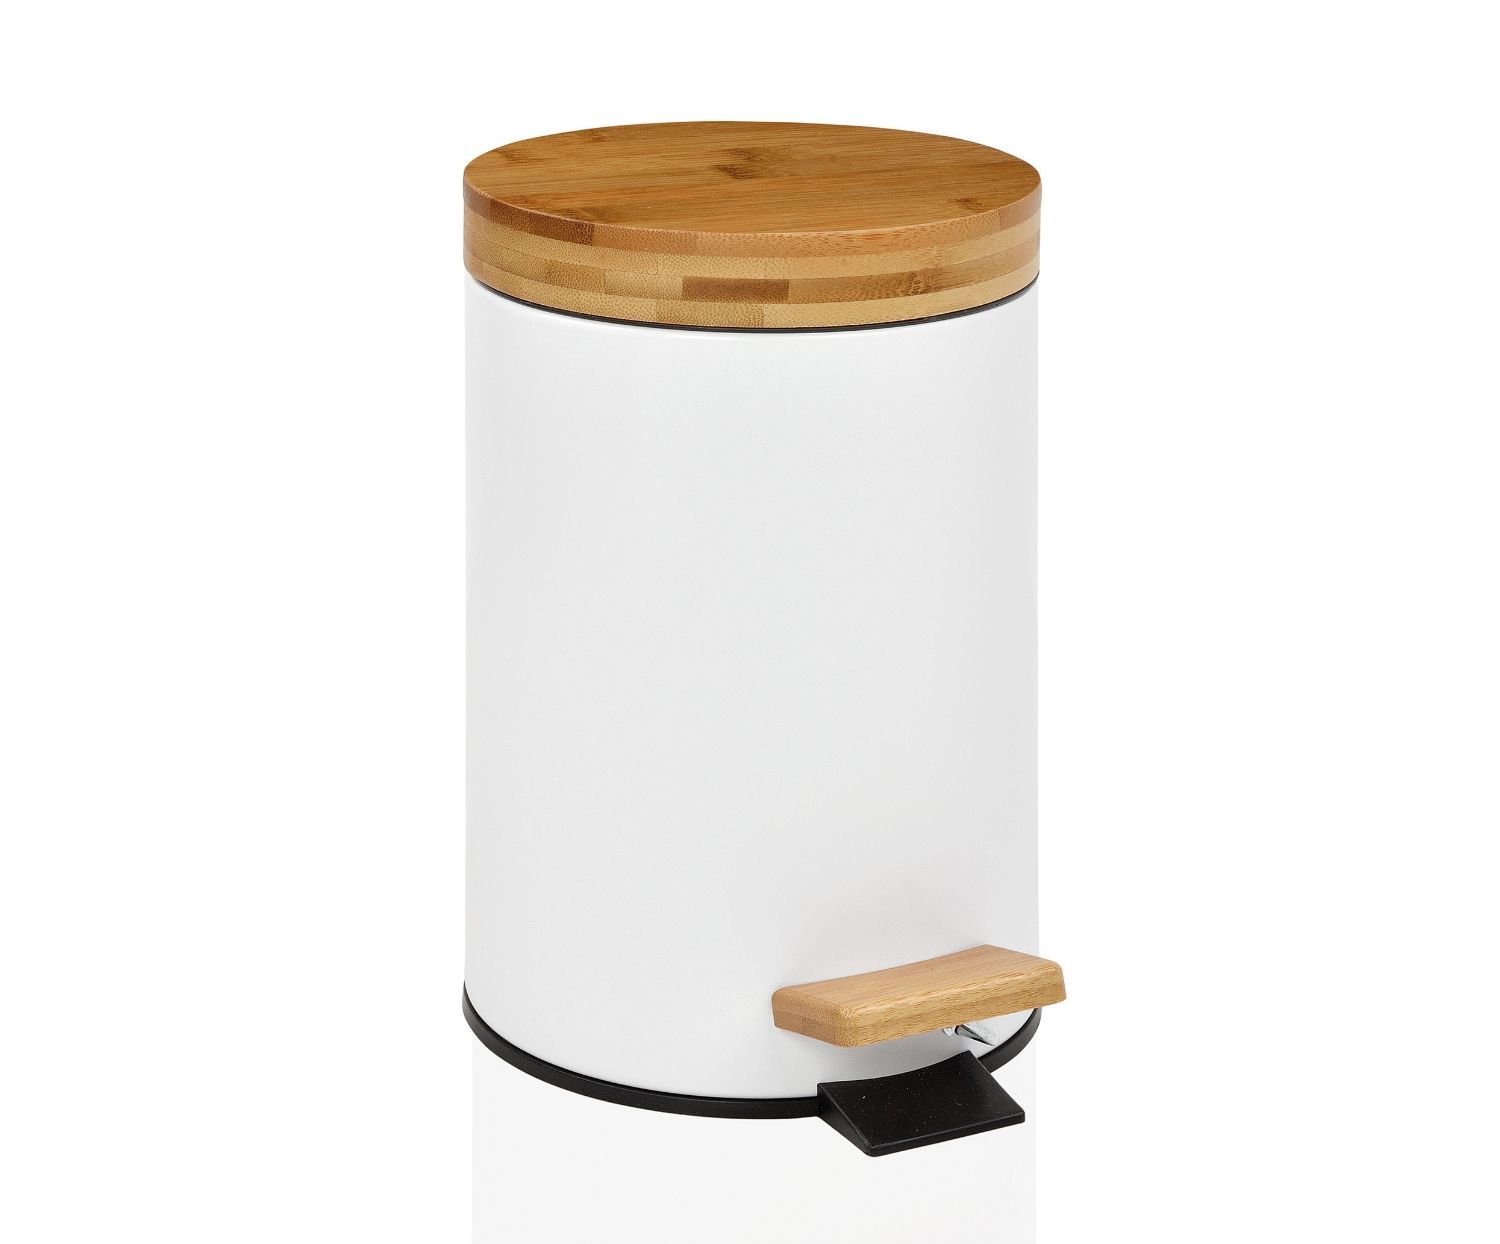 Accesorios de baño Papelera de baño con tapa de madera 3L - Cubo de basura  para baño con tapa y pedal Cierre silencioso color blanco 580241 -  AliExpress